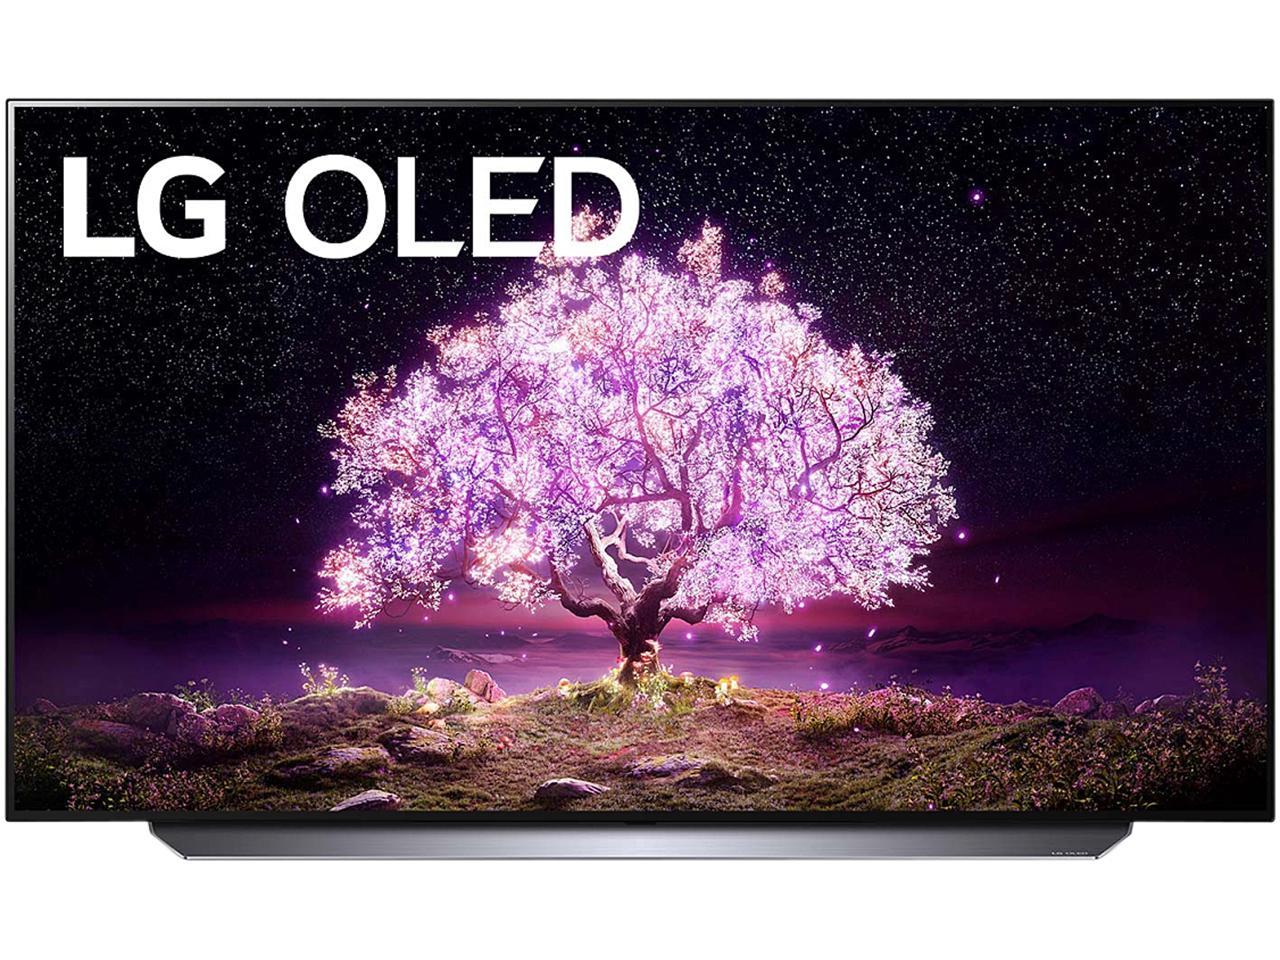 LG 65" OLED65C1PUB 4K Smart OLED TV + $175 VISA GC + 4 Year Warranty w/ Burn in Coverage $1796.99 + FS